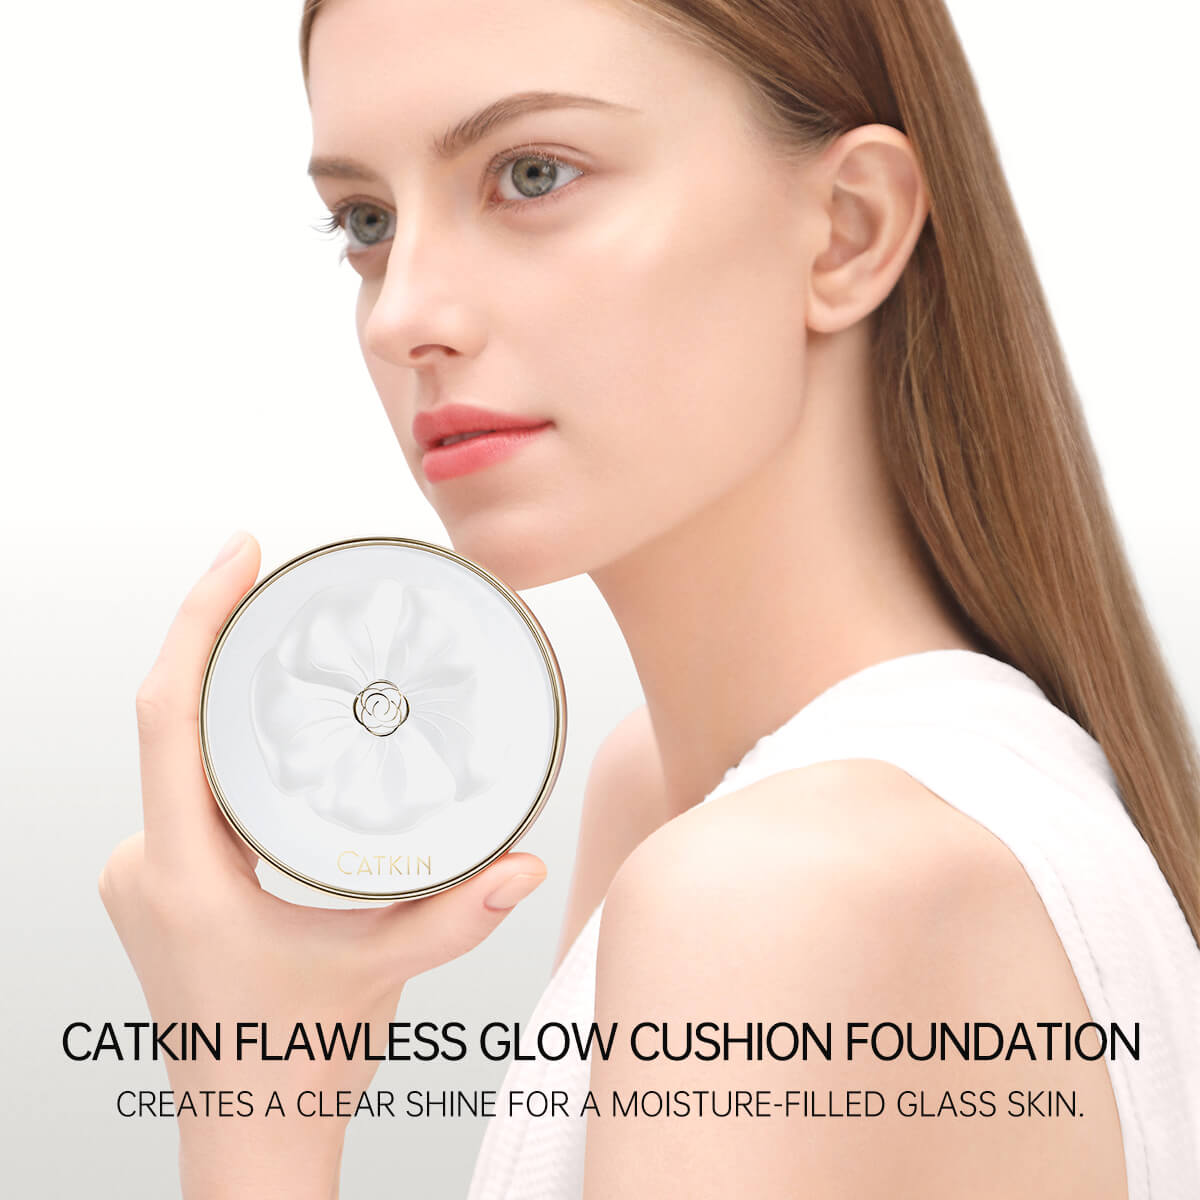 CATKIN Flawless Glow Long Lasting Cushion Foundation Skin Nourishing & Makeup 2 In 1 Natural Finish